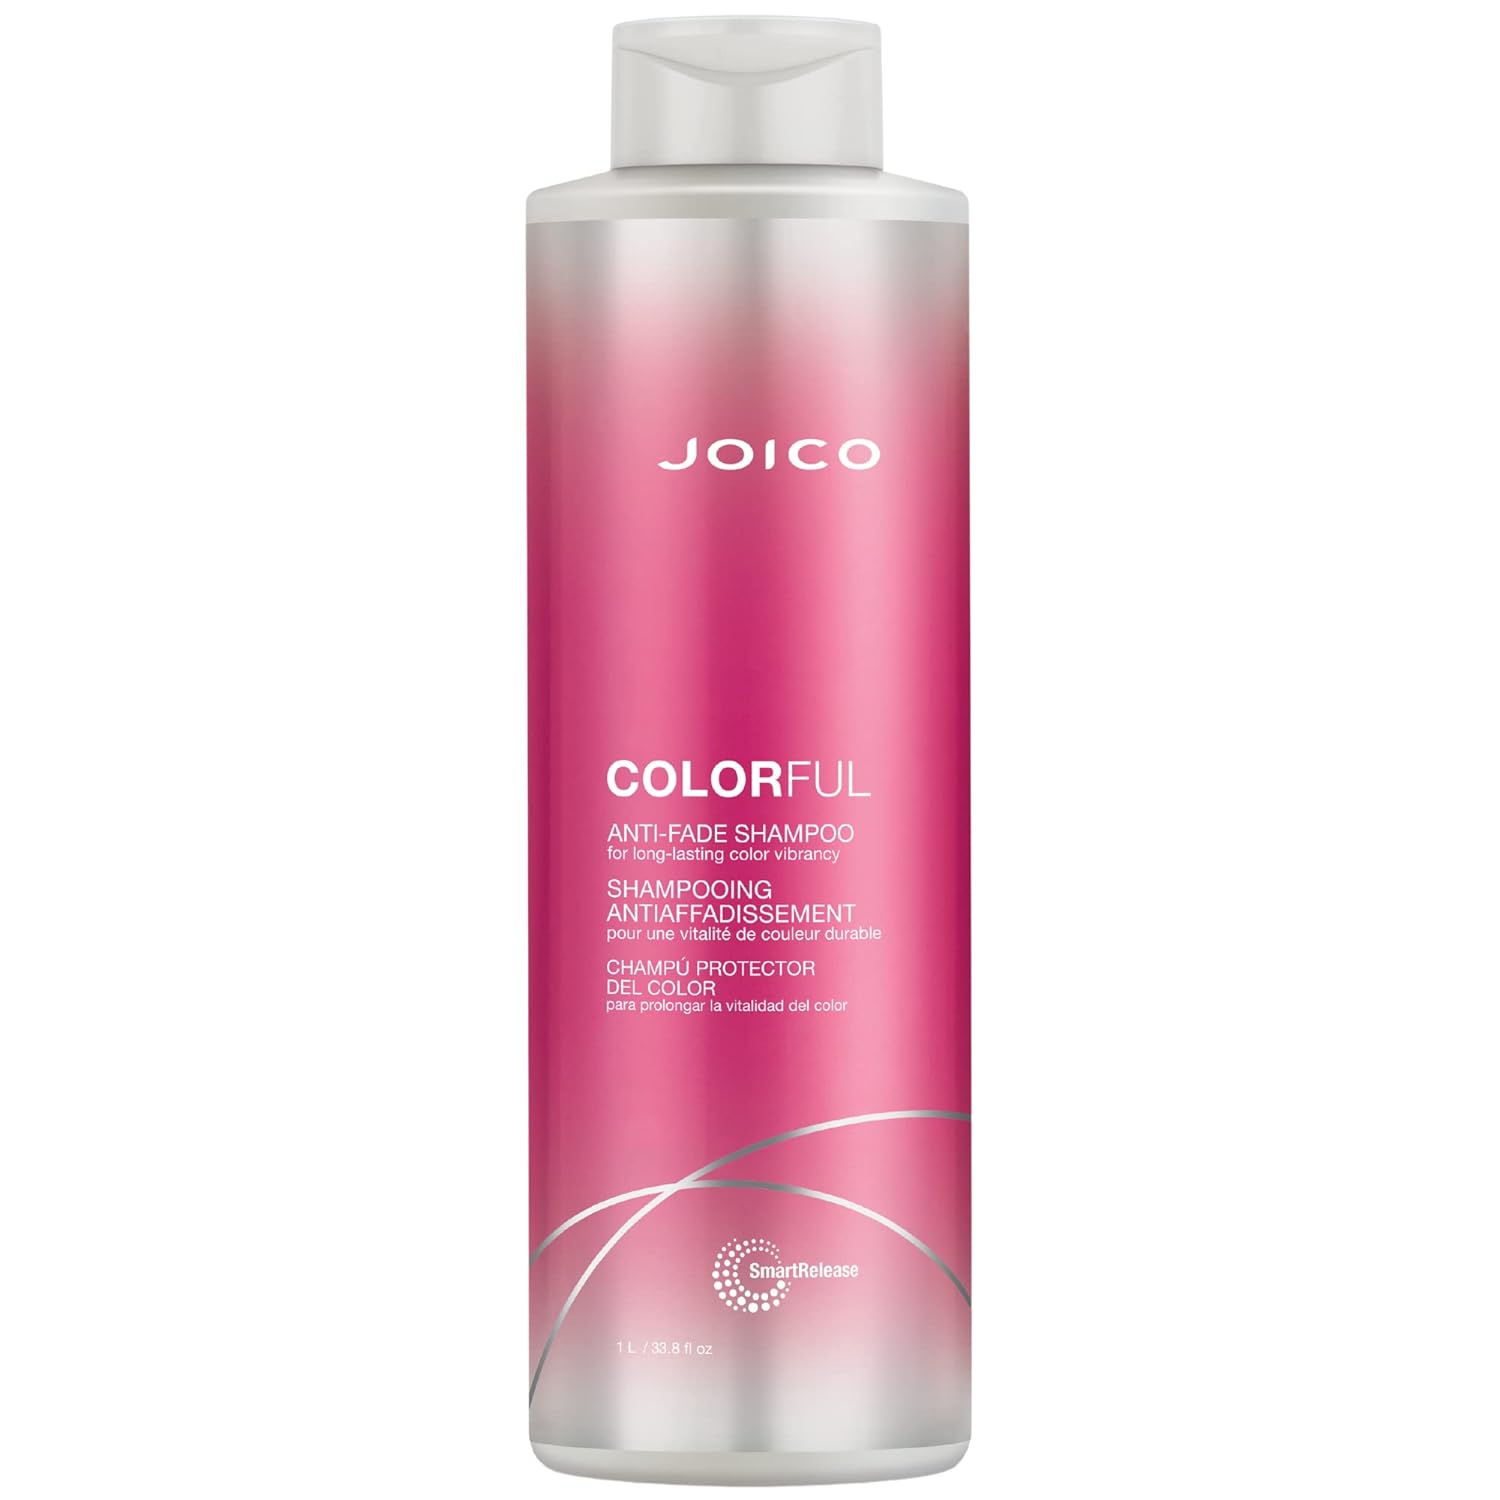 Joico ColorFUL Antifade Shampoo, 1 L